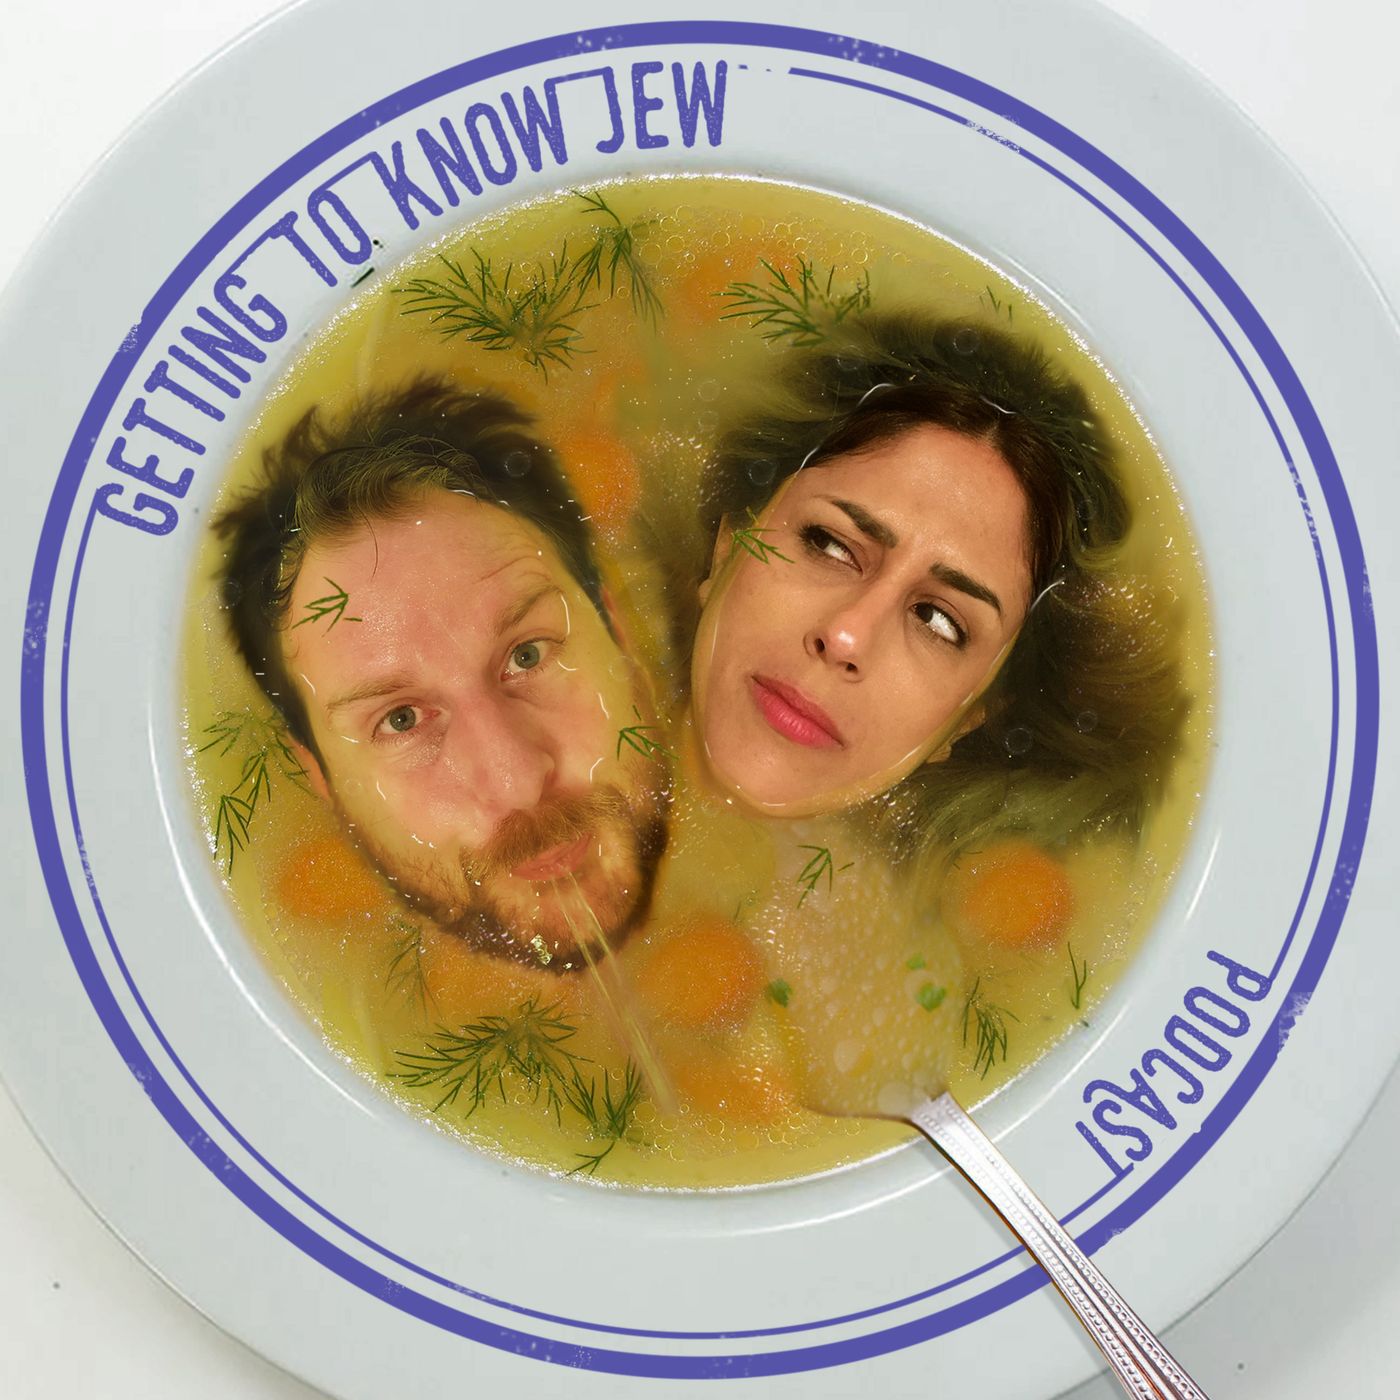 Getting to Know Jew